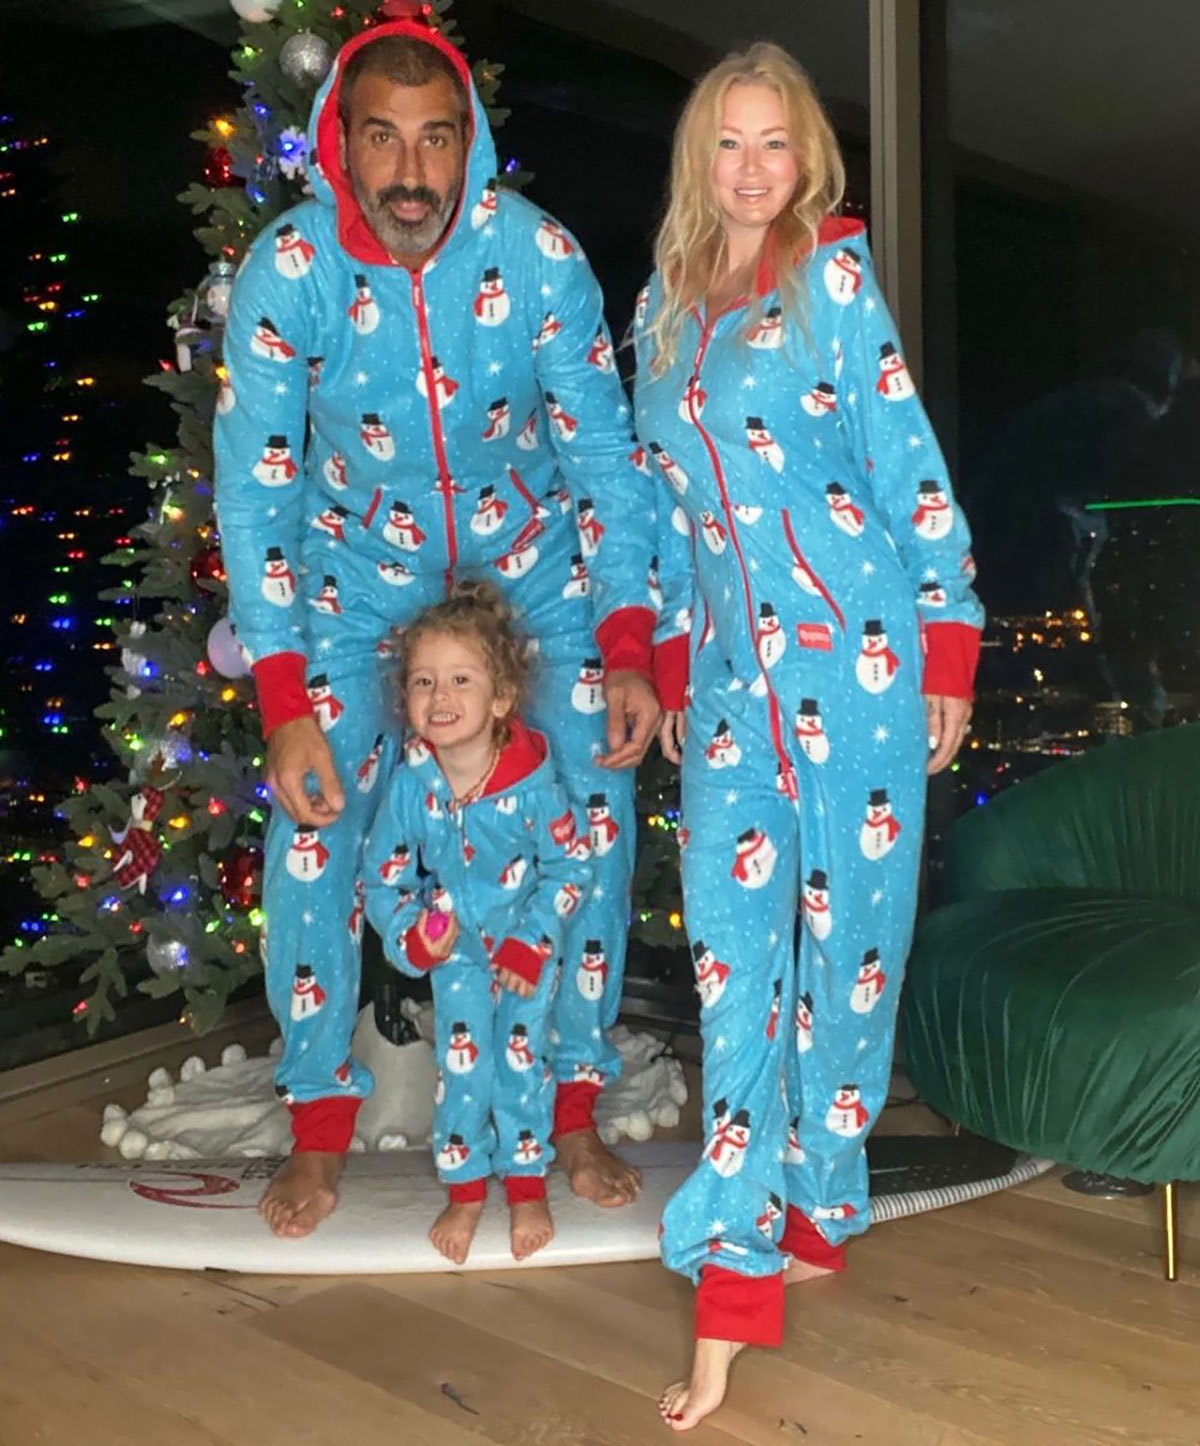 Celeb Parents Wear Matching Pajamas With Their Kids: Pics